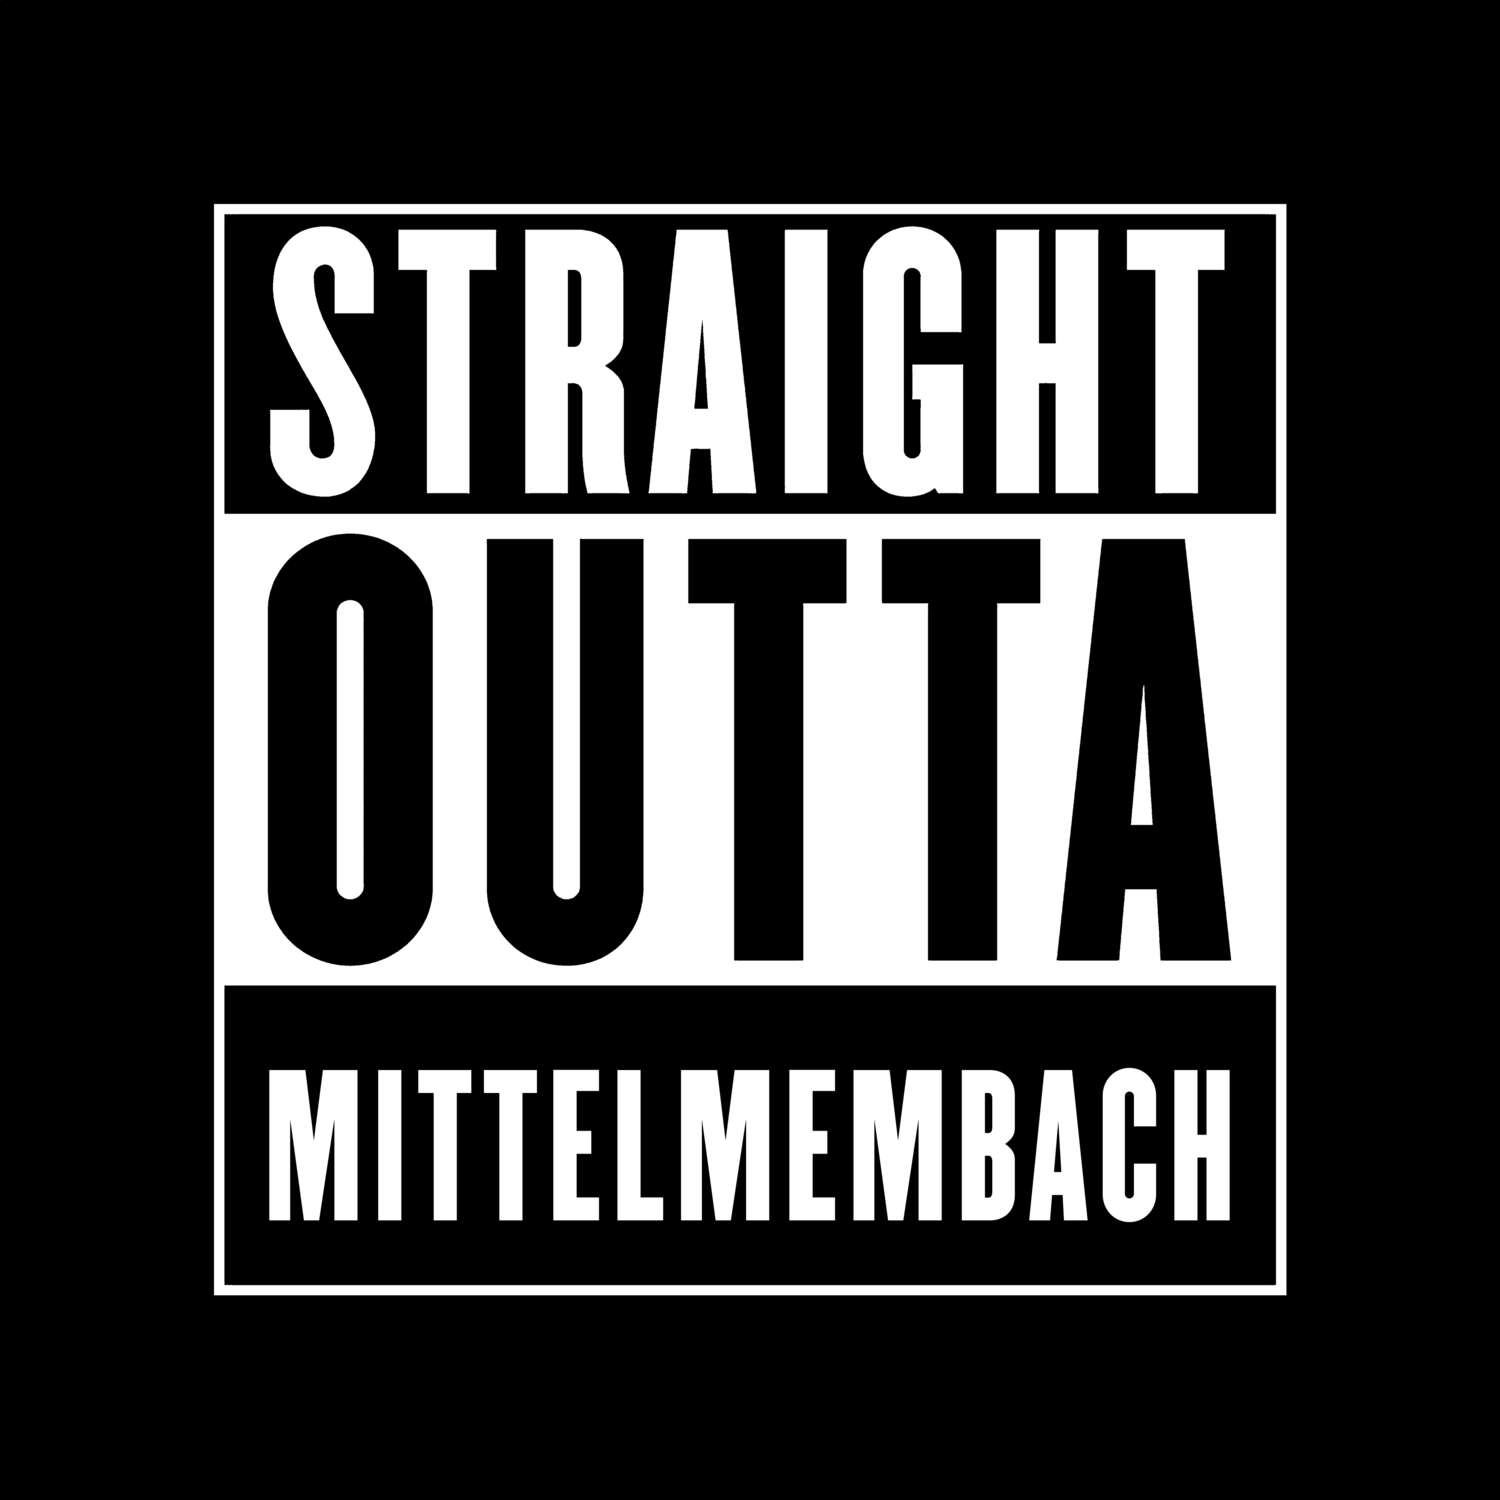 Mittelmembach T-Shirt »Straight Outta«